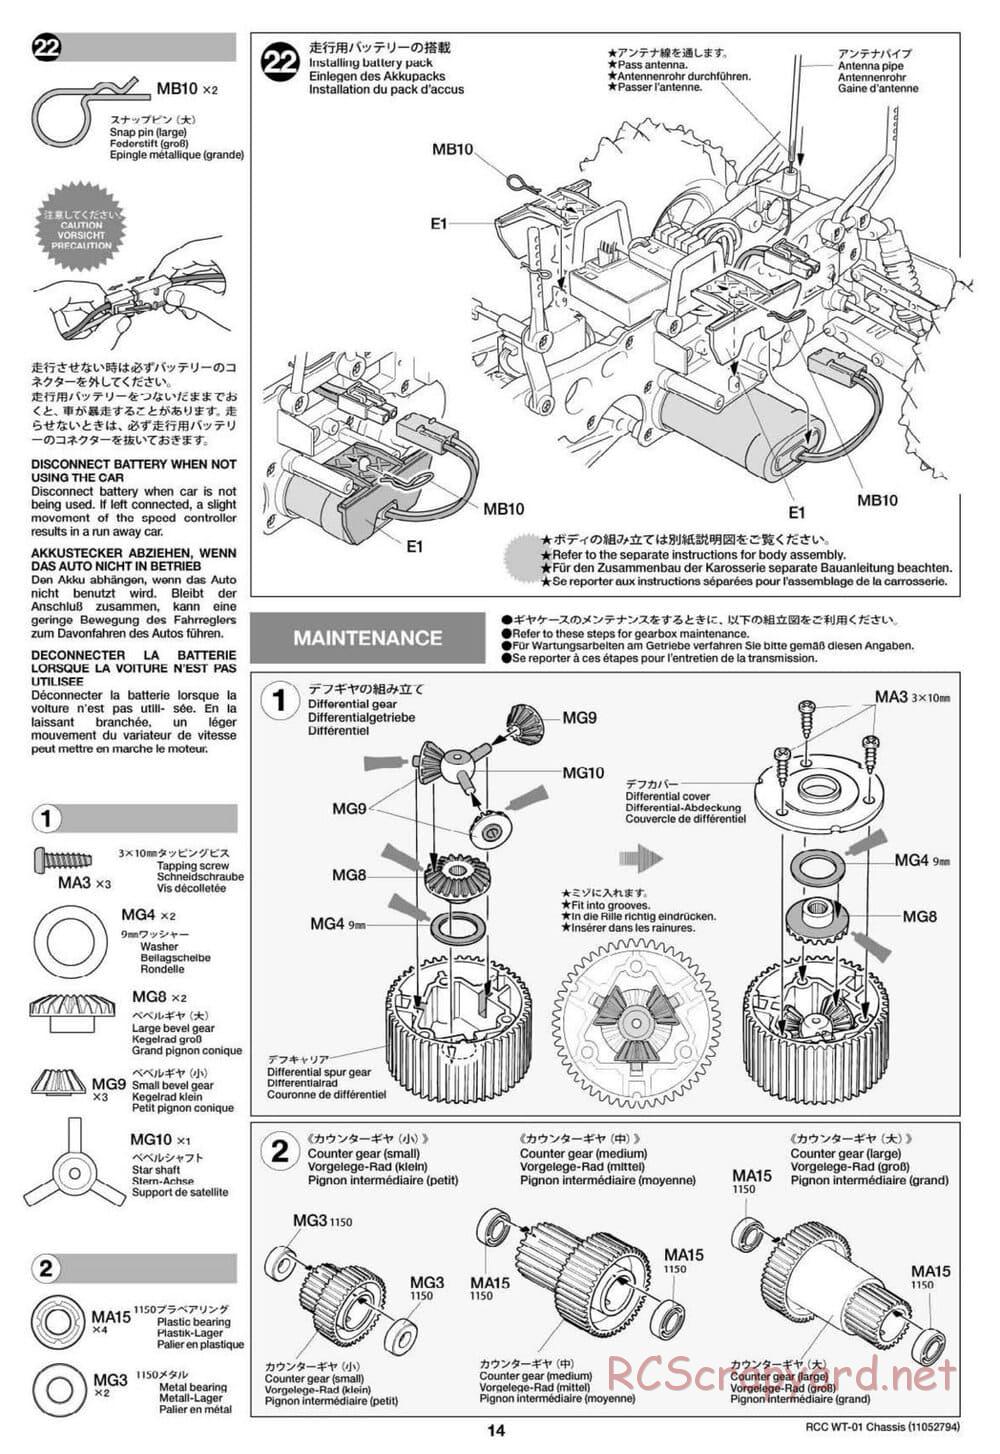 Tamiya - Mud Blaster II - WT-01 Chassis - Manual - Page 14